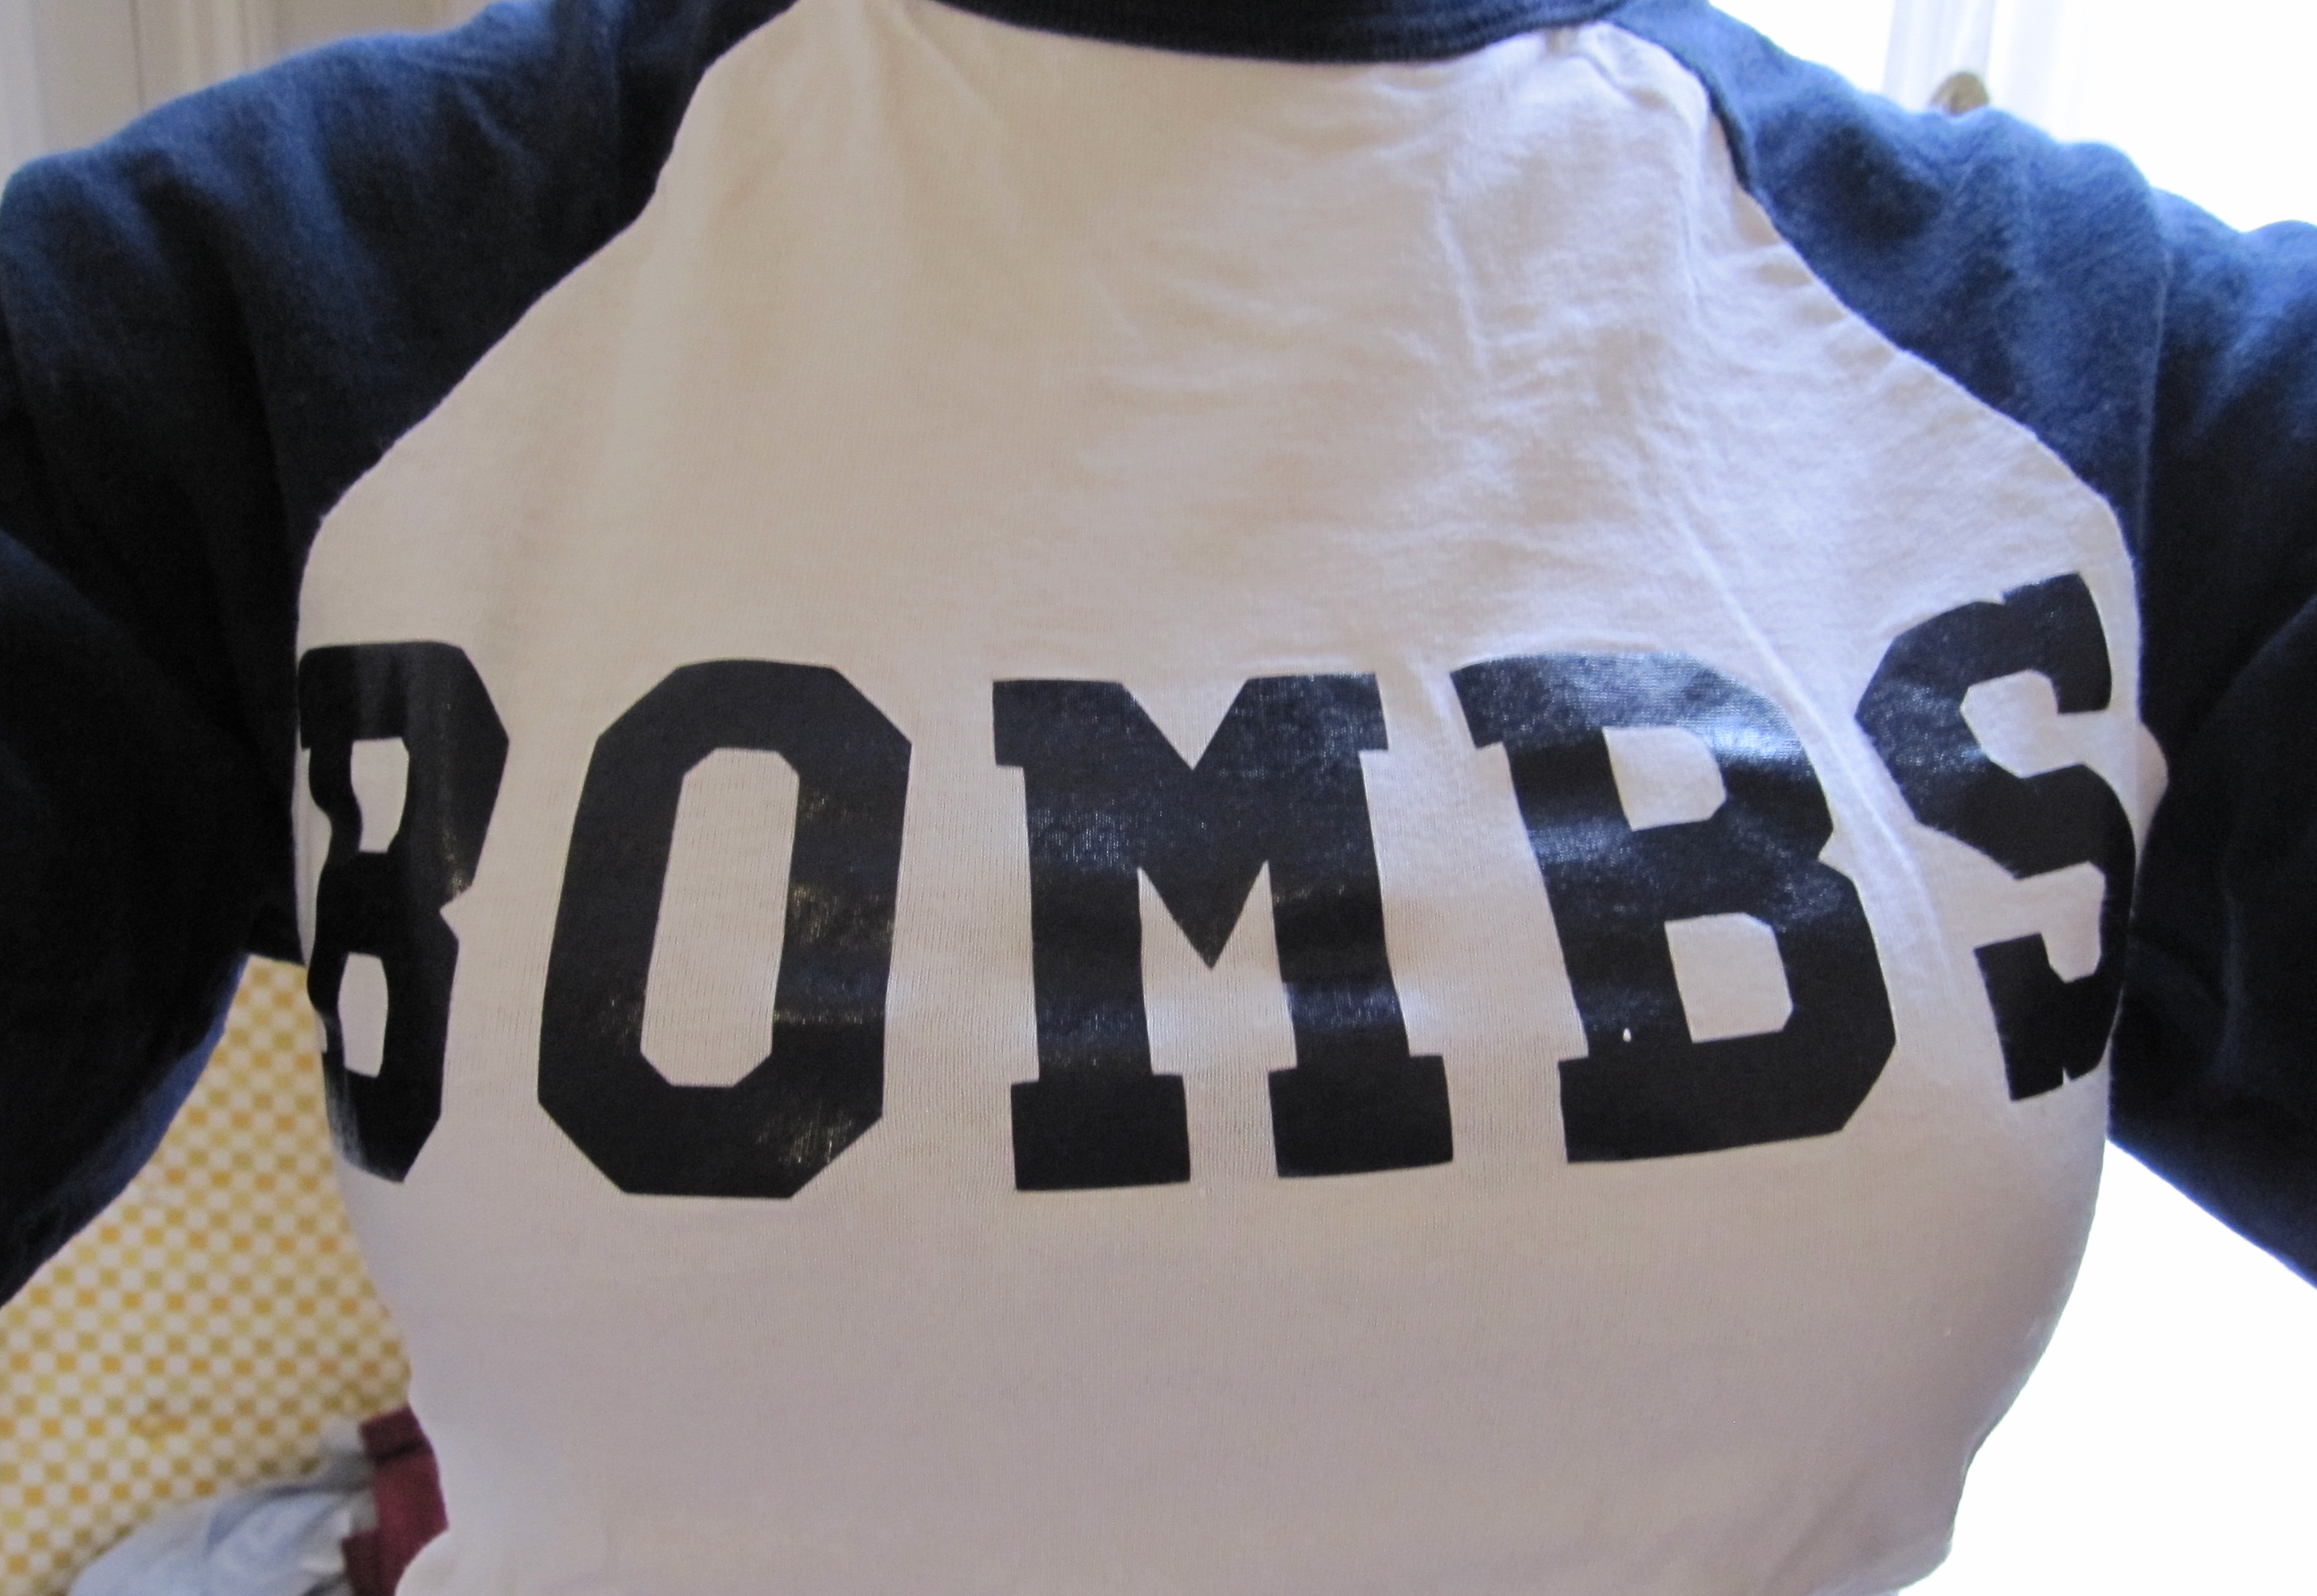 or boobs bombs